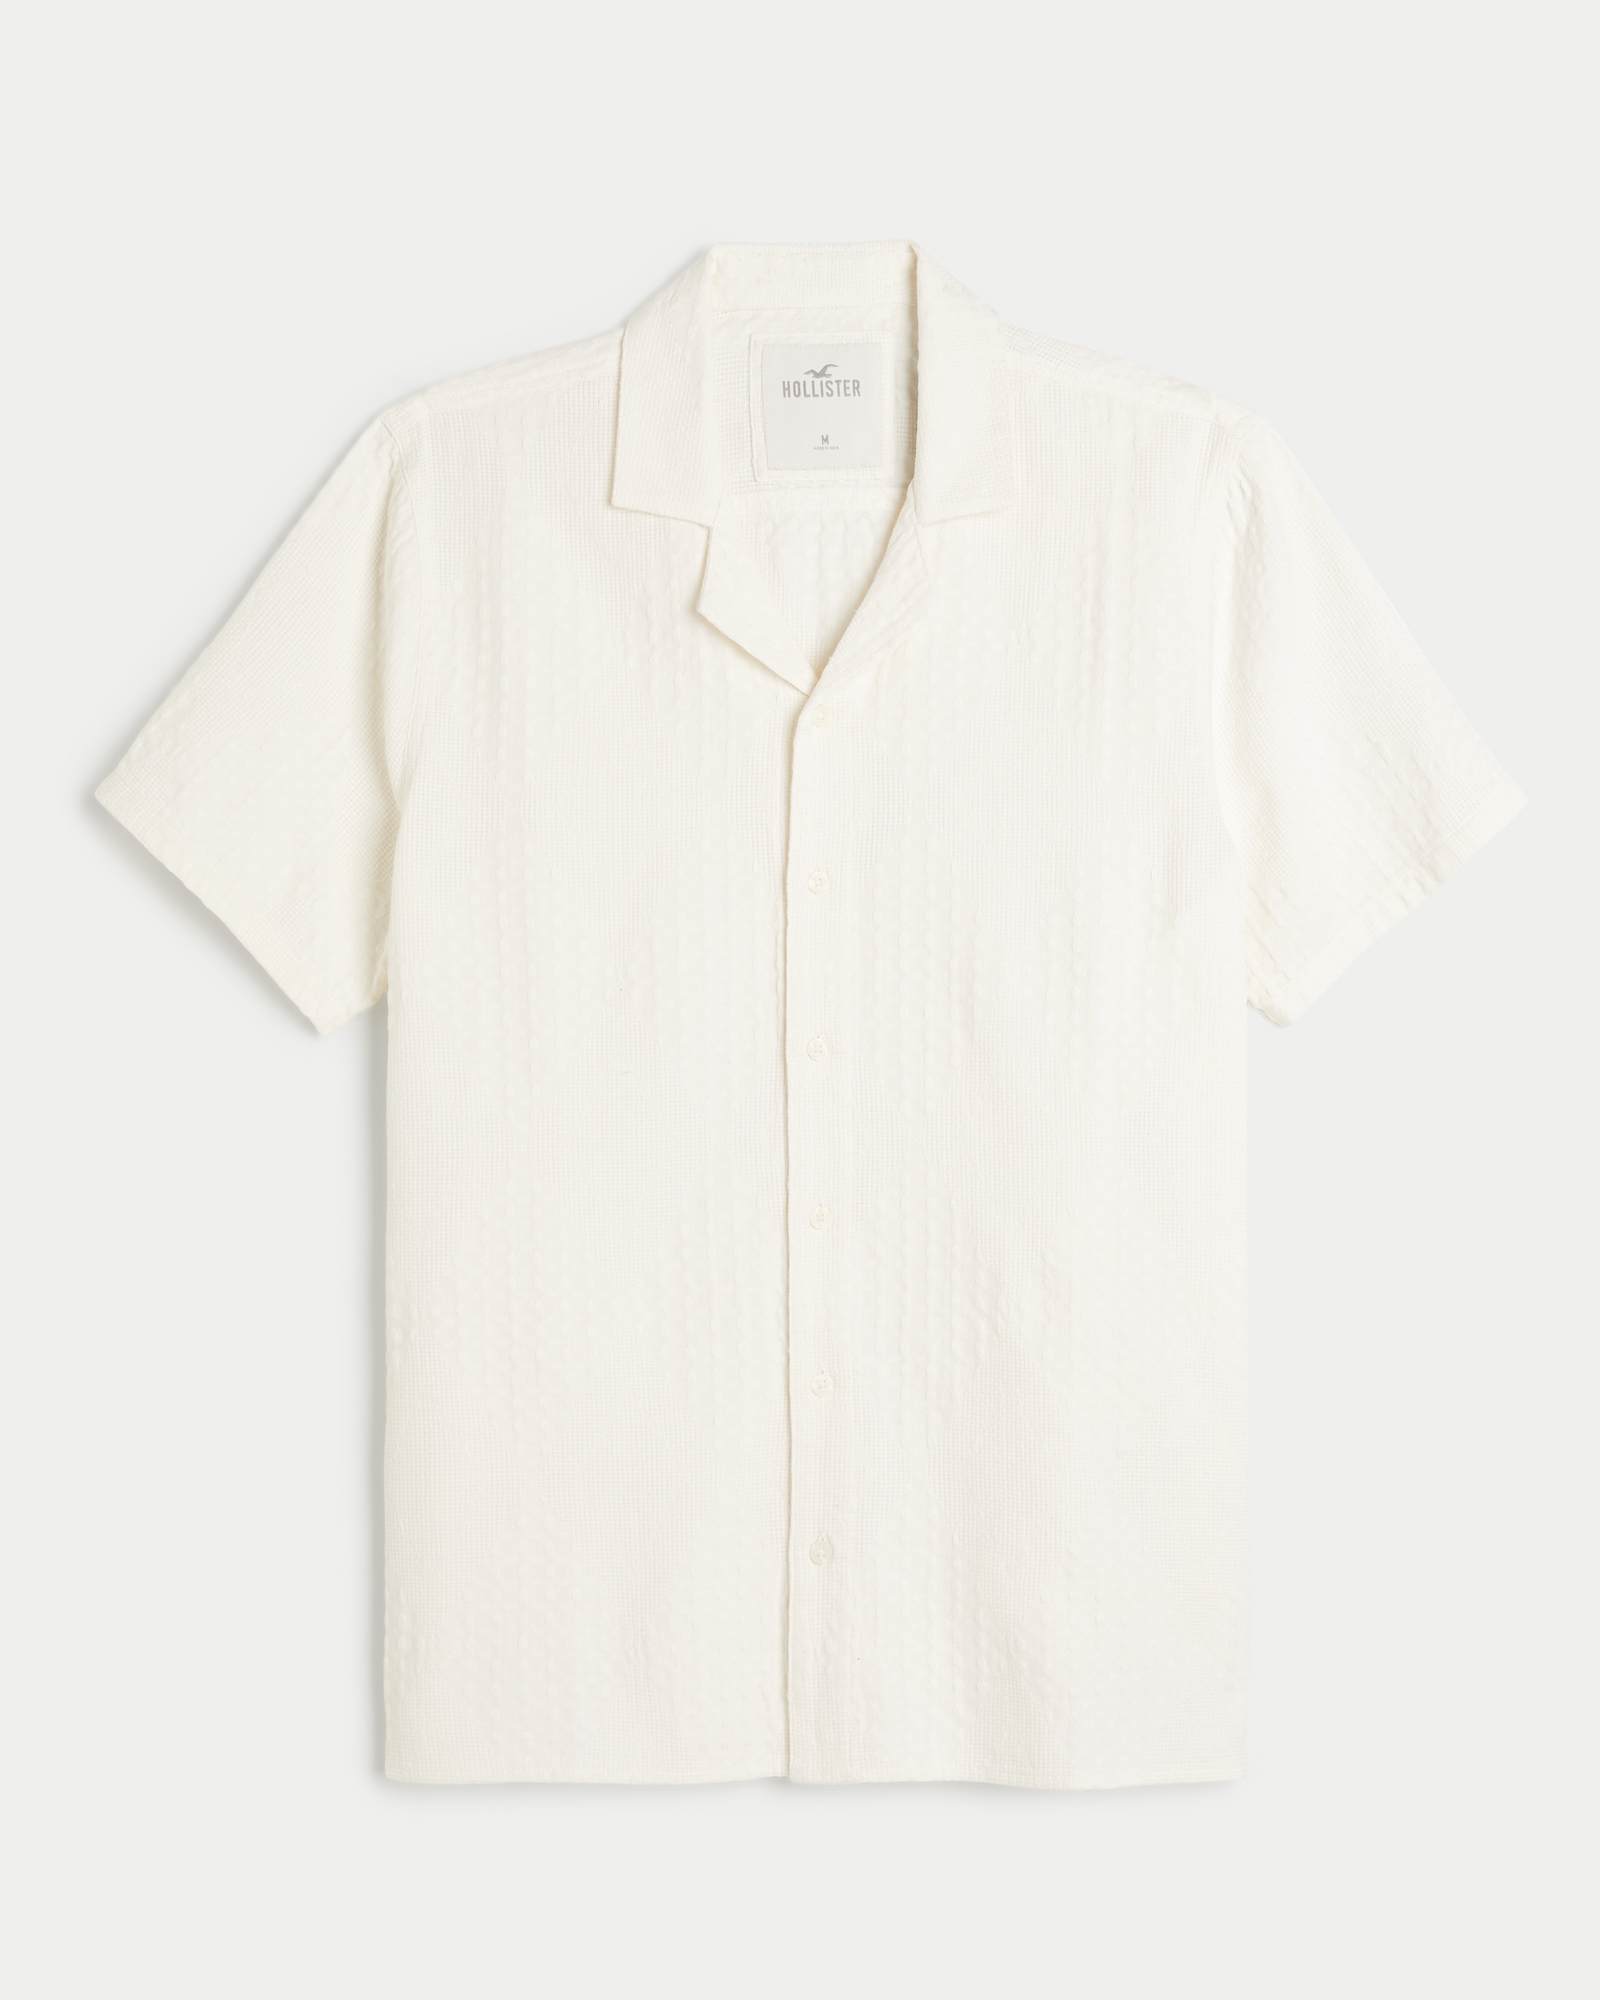 Hollister Men’s Striped LS Button Up Casual Shirt Size L #14787